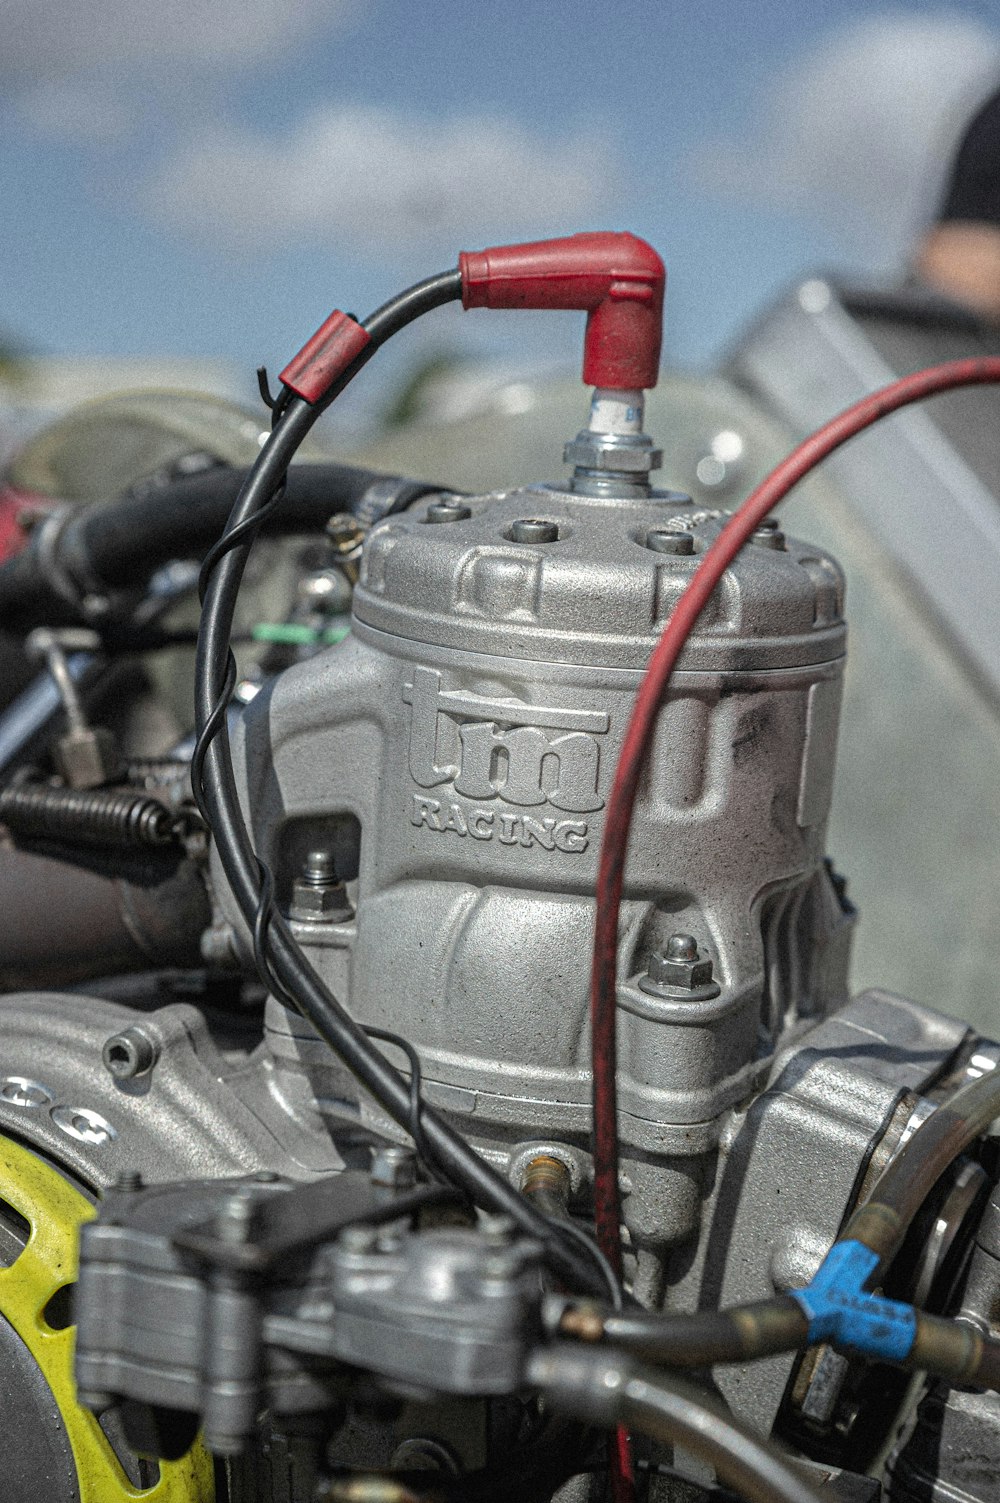 a close-up of a motor